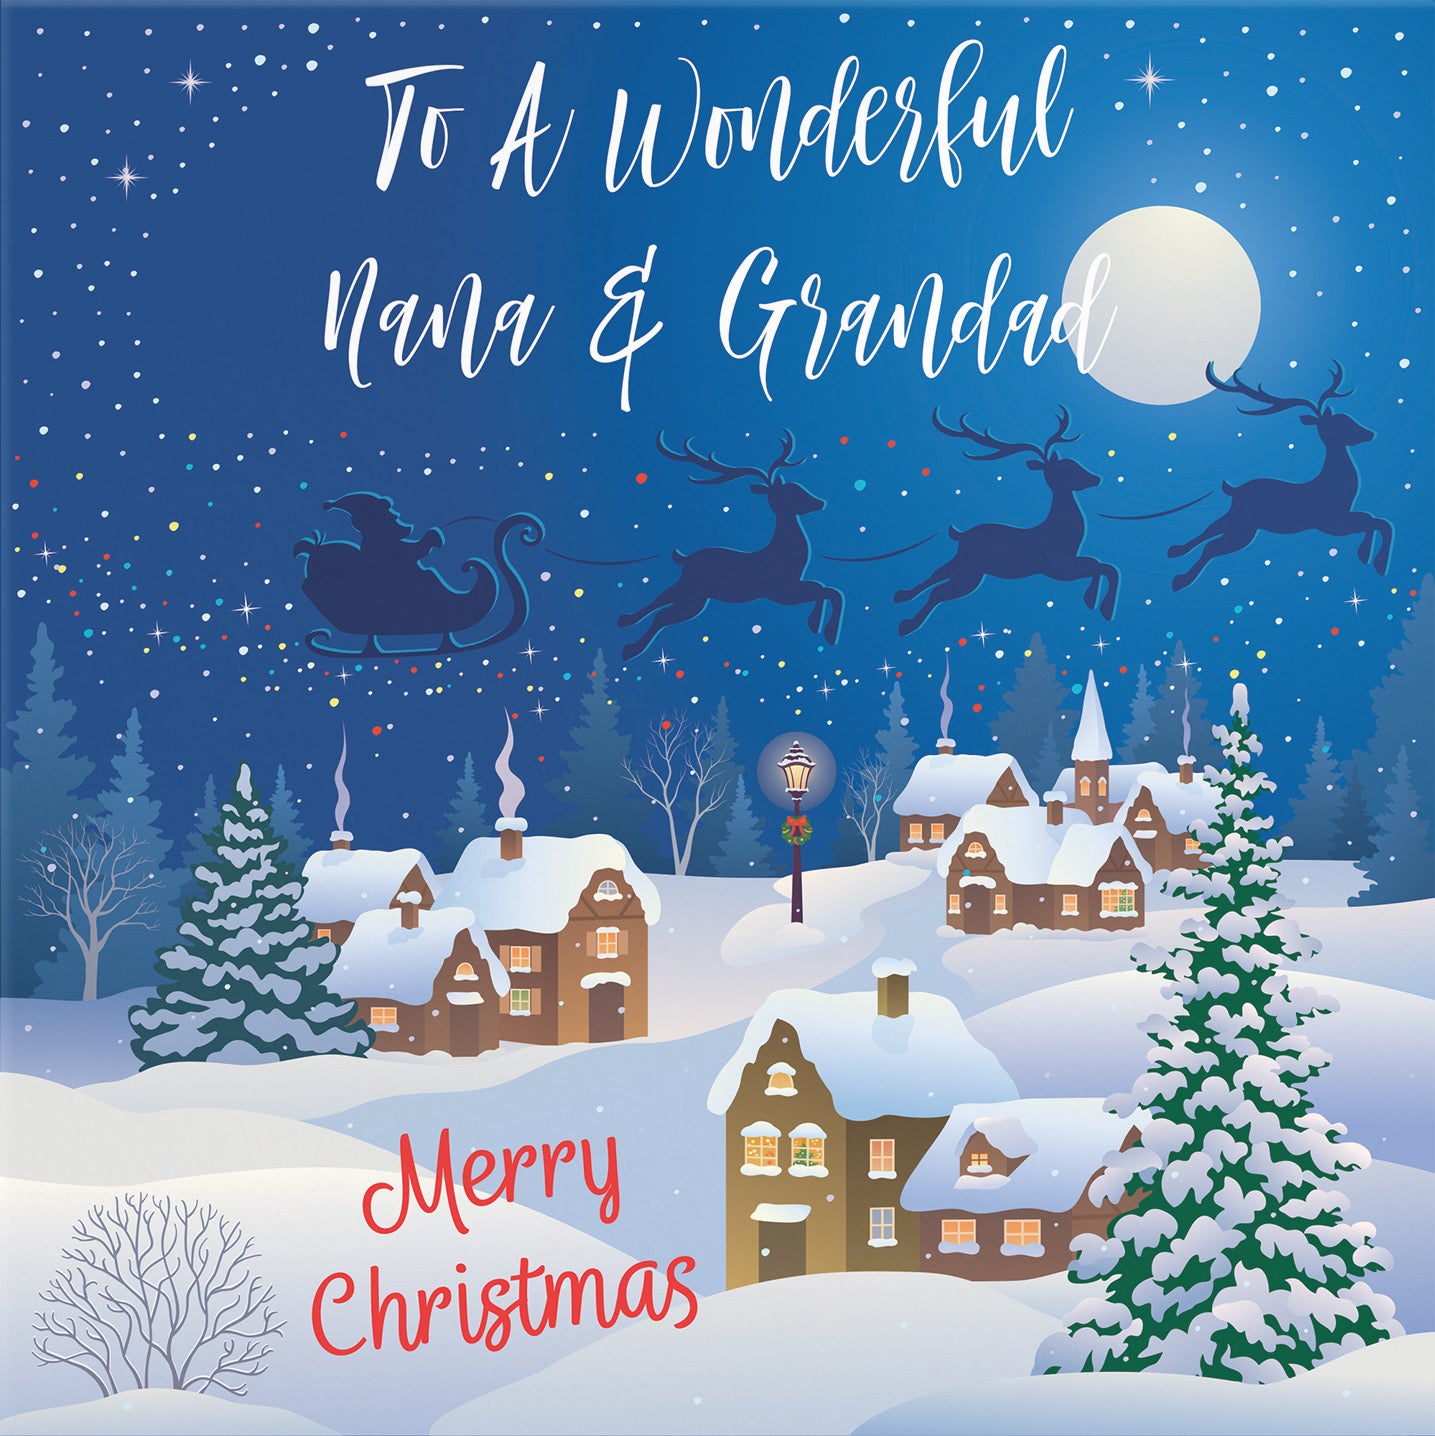 Nana And Grandad Winter Wonderland Christmas Card - Default Title (B09K7SMY9Q)